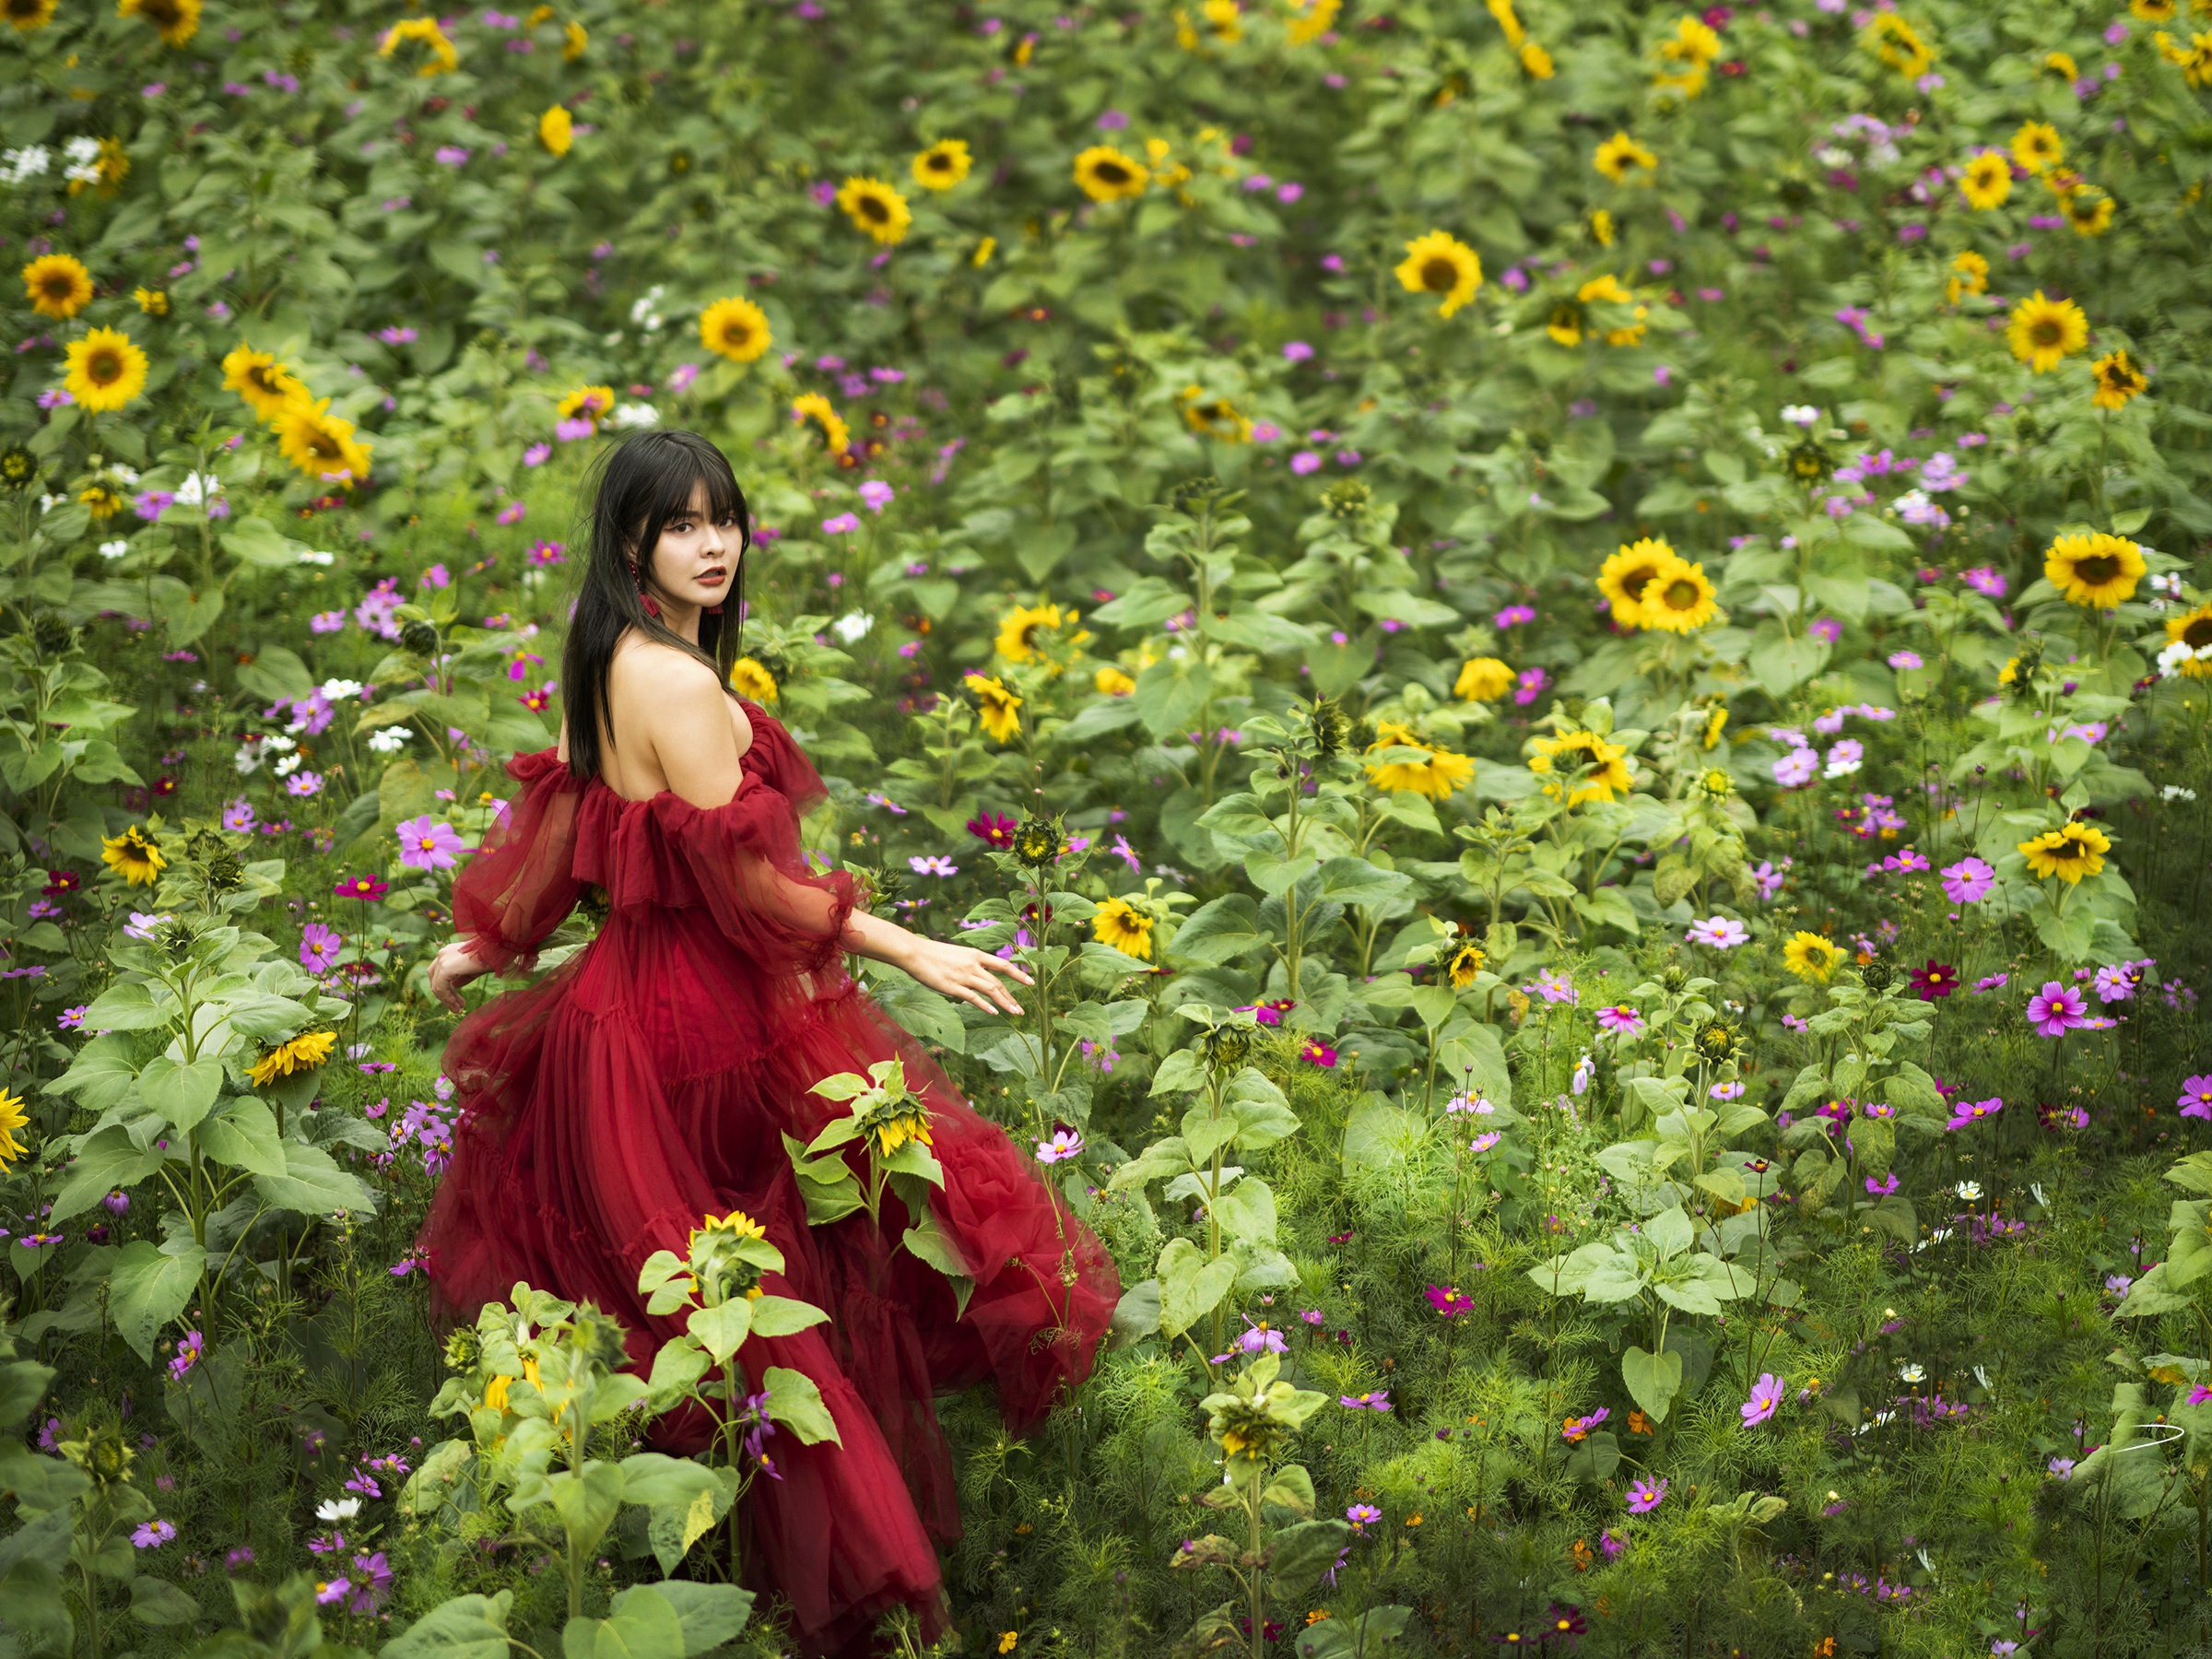 Asian Model Colorful Flowers Plants Dark Hair Outdoors Women Outdoors Dress Red Dress 2400x1800